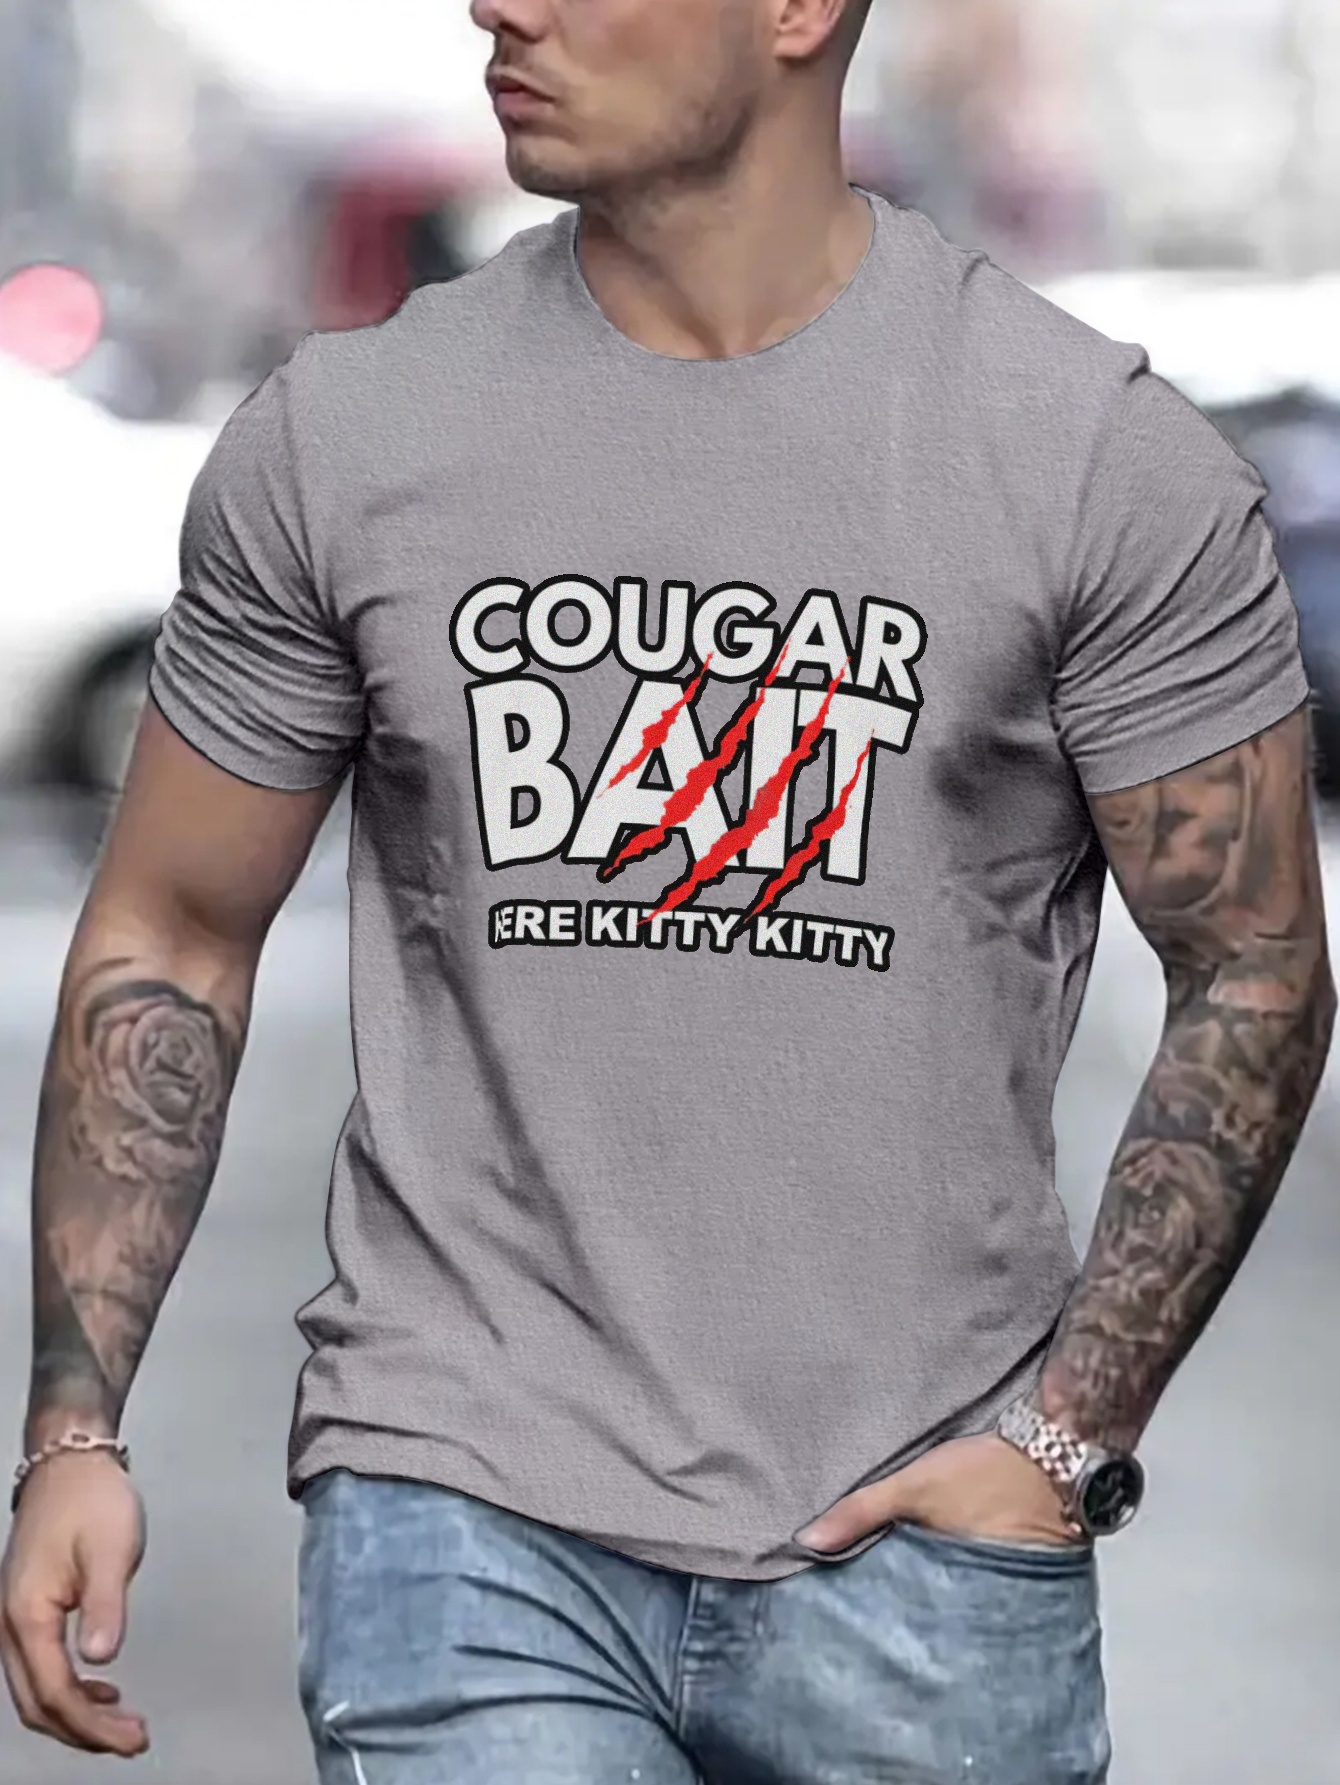 Bait Dirty Joke Print T Shirt, Tees For Men, Casual Short Sleeve T-shirt For Summer